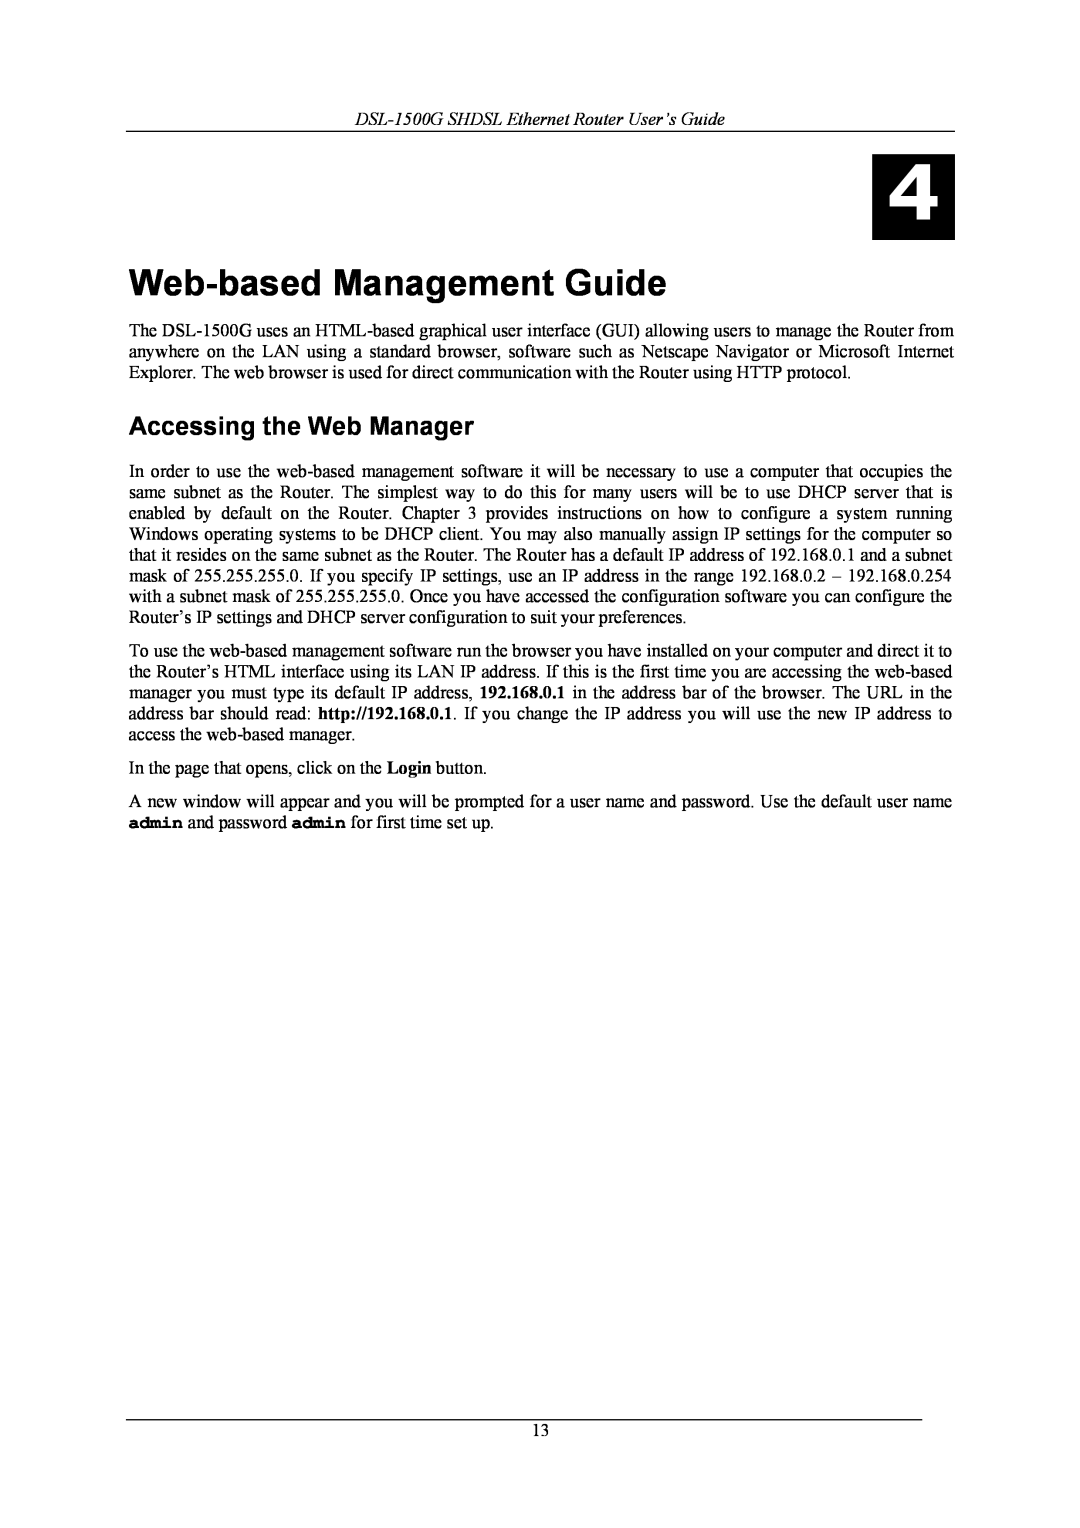 D-Link manual Web-based Management Guide, Accessing the Web Manager, DSL-1500G SHDSL Ethernet Router User’s Guide 